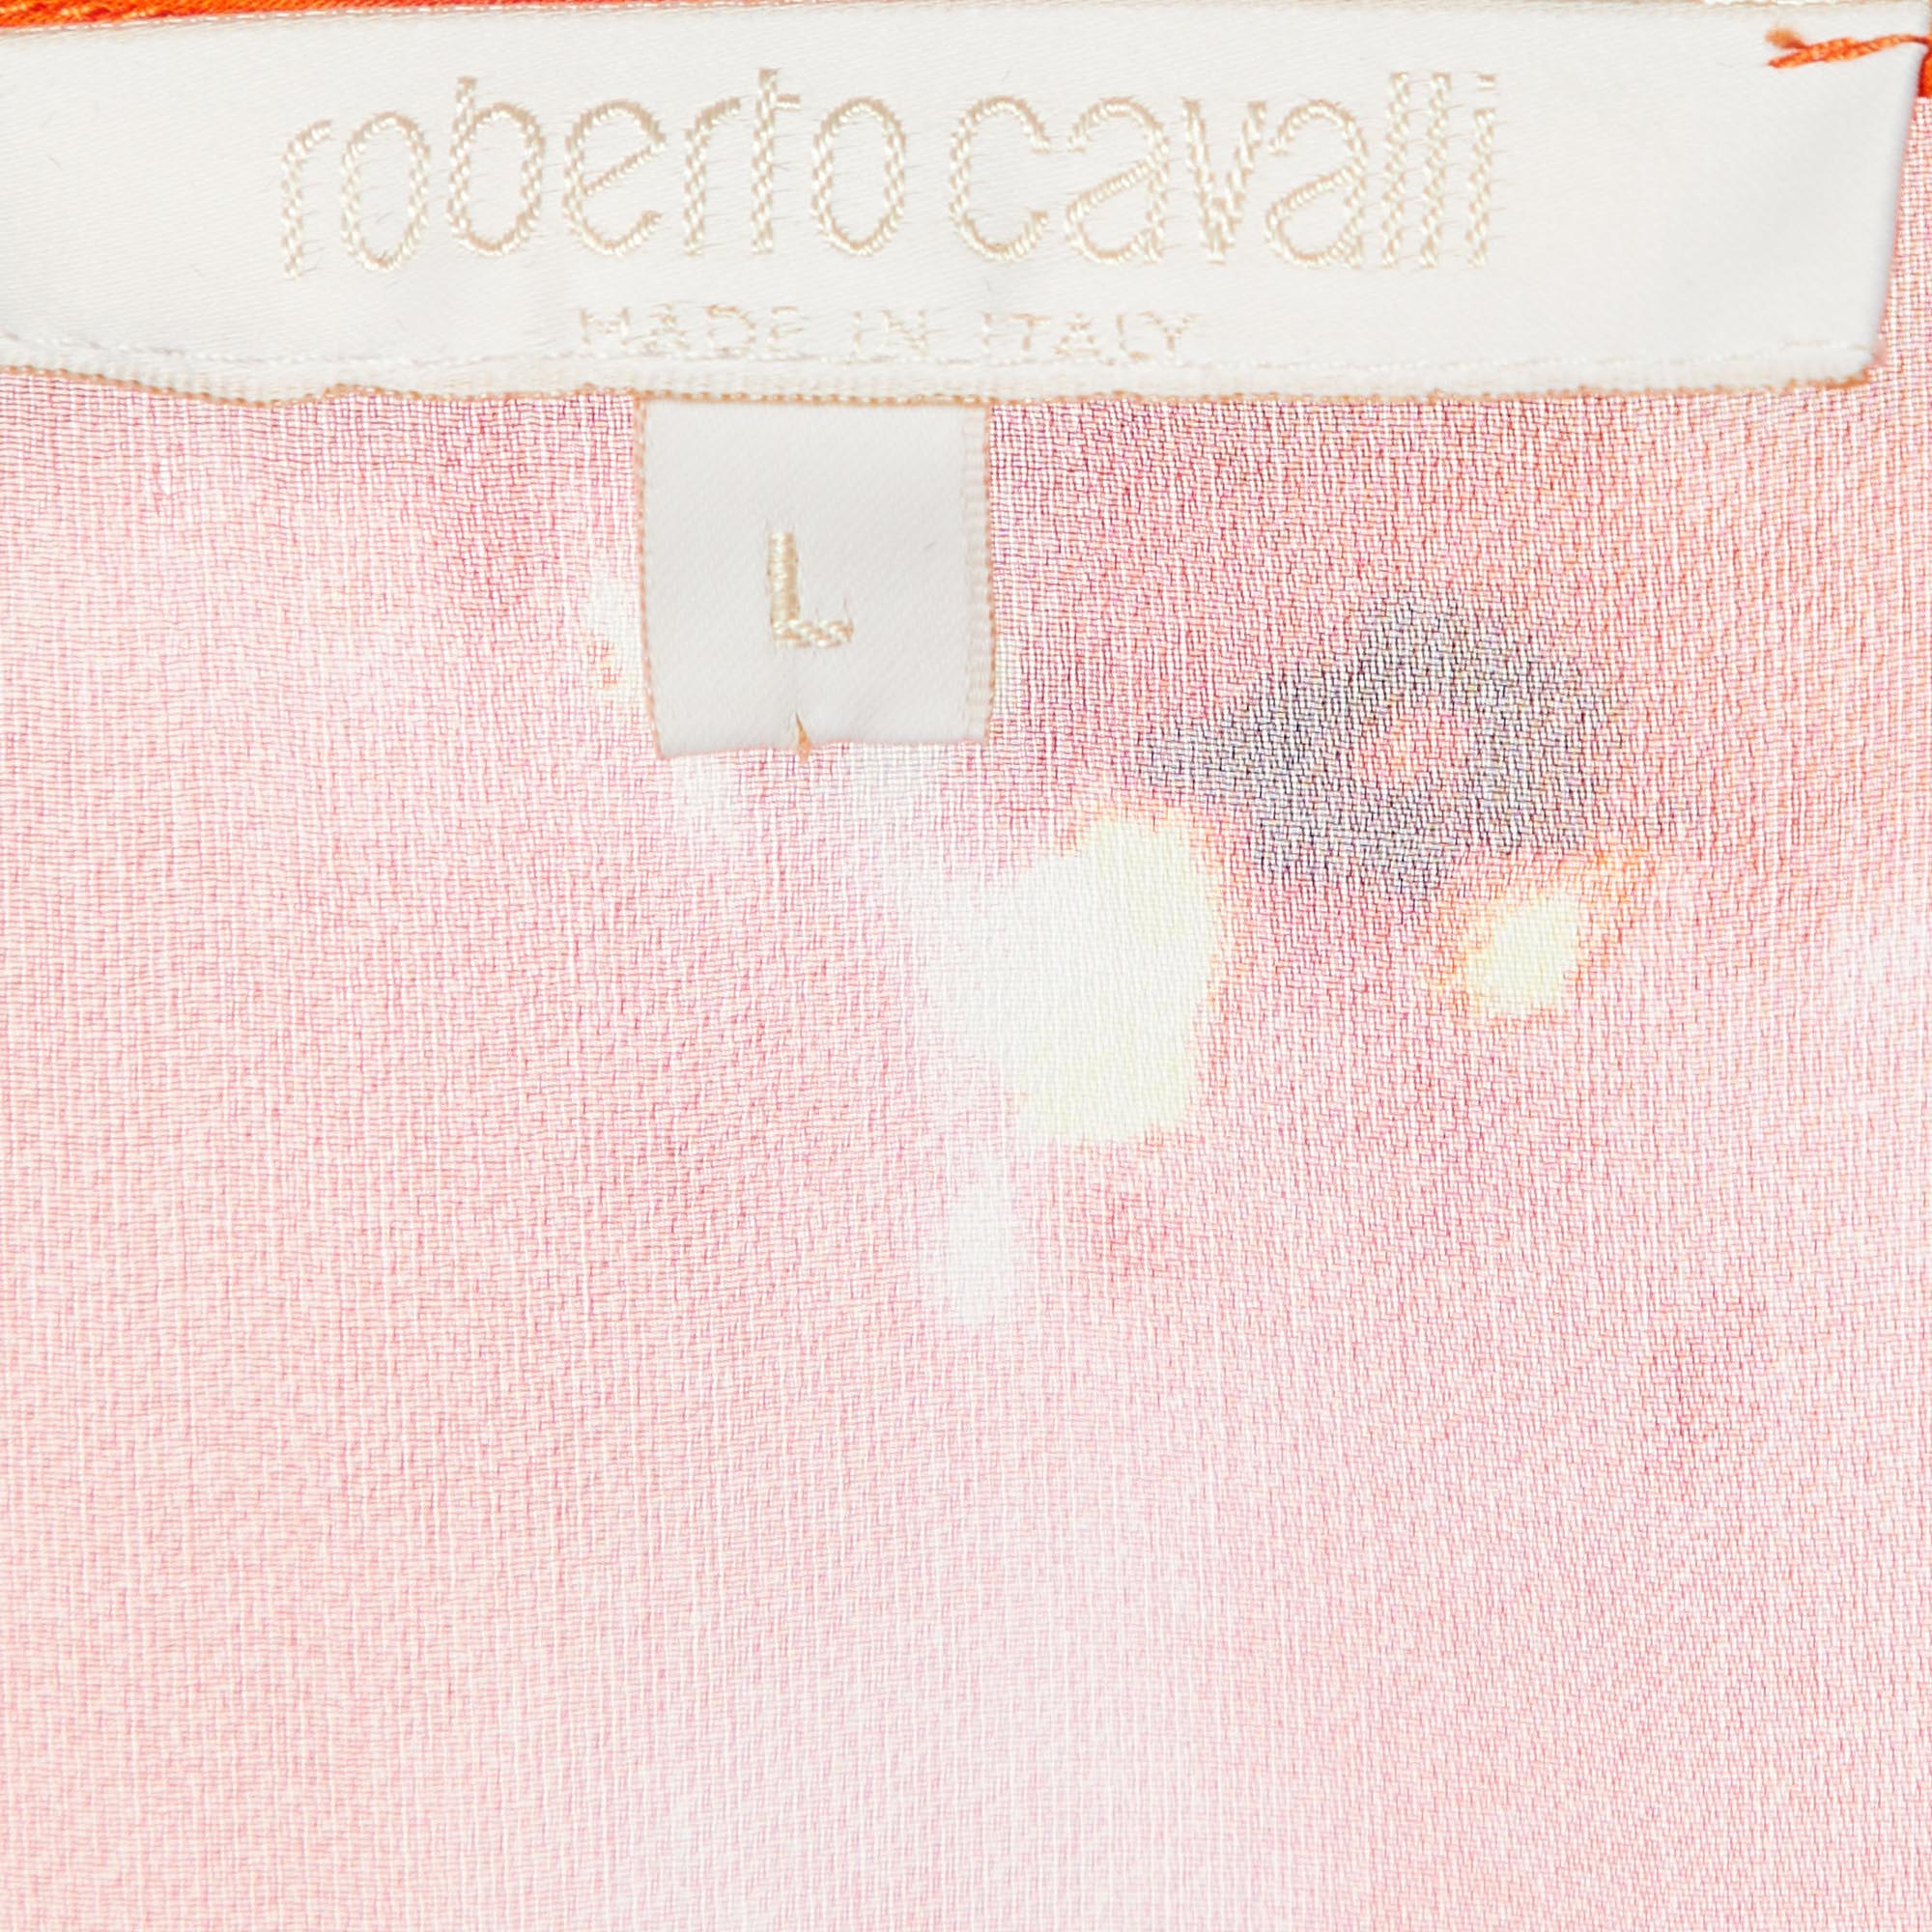 Roberto Cavalli Multicolor Printed Silk Ruffled Top & Satin Palazzo Pants L/M